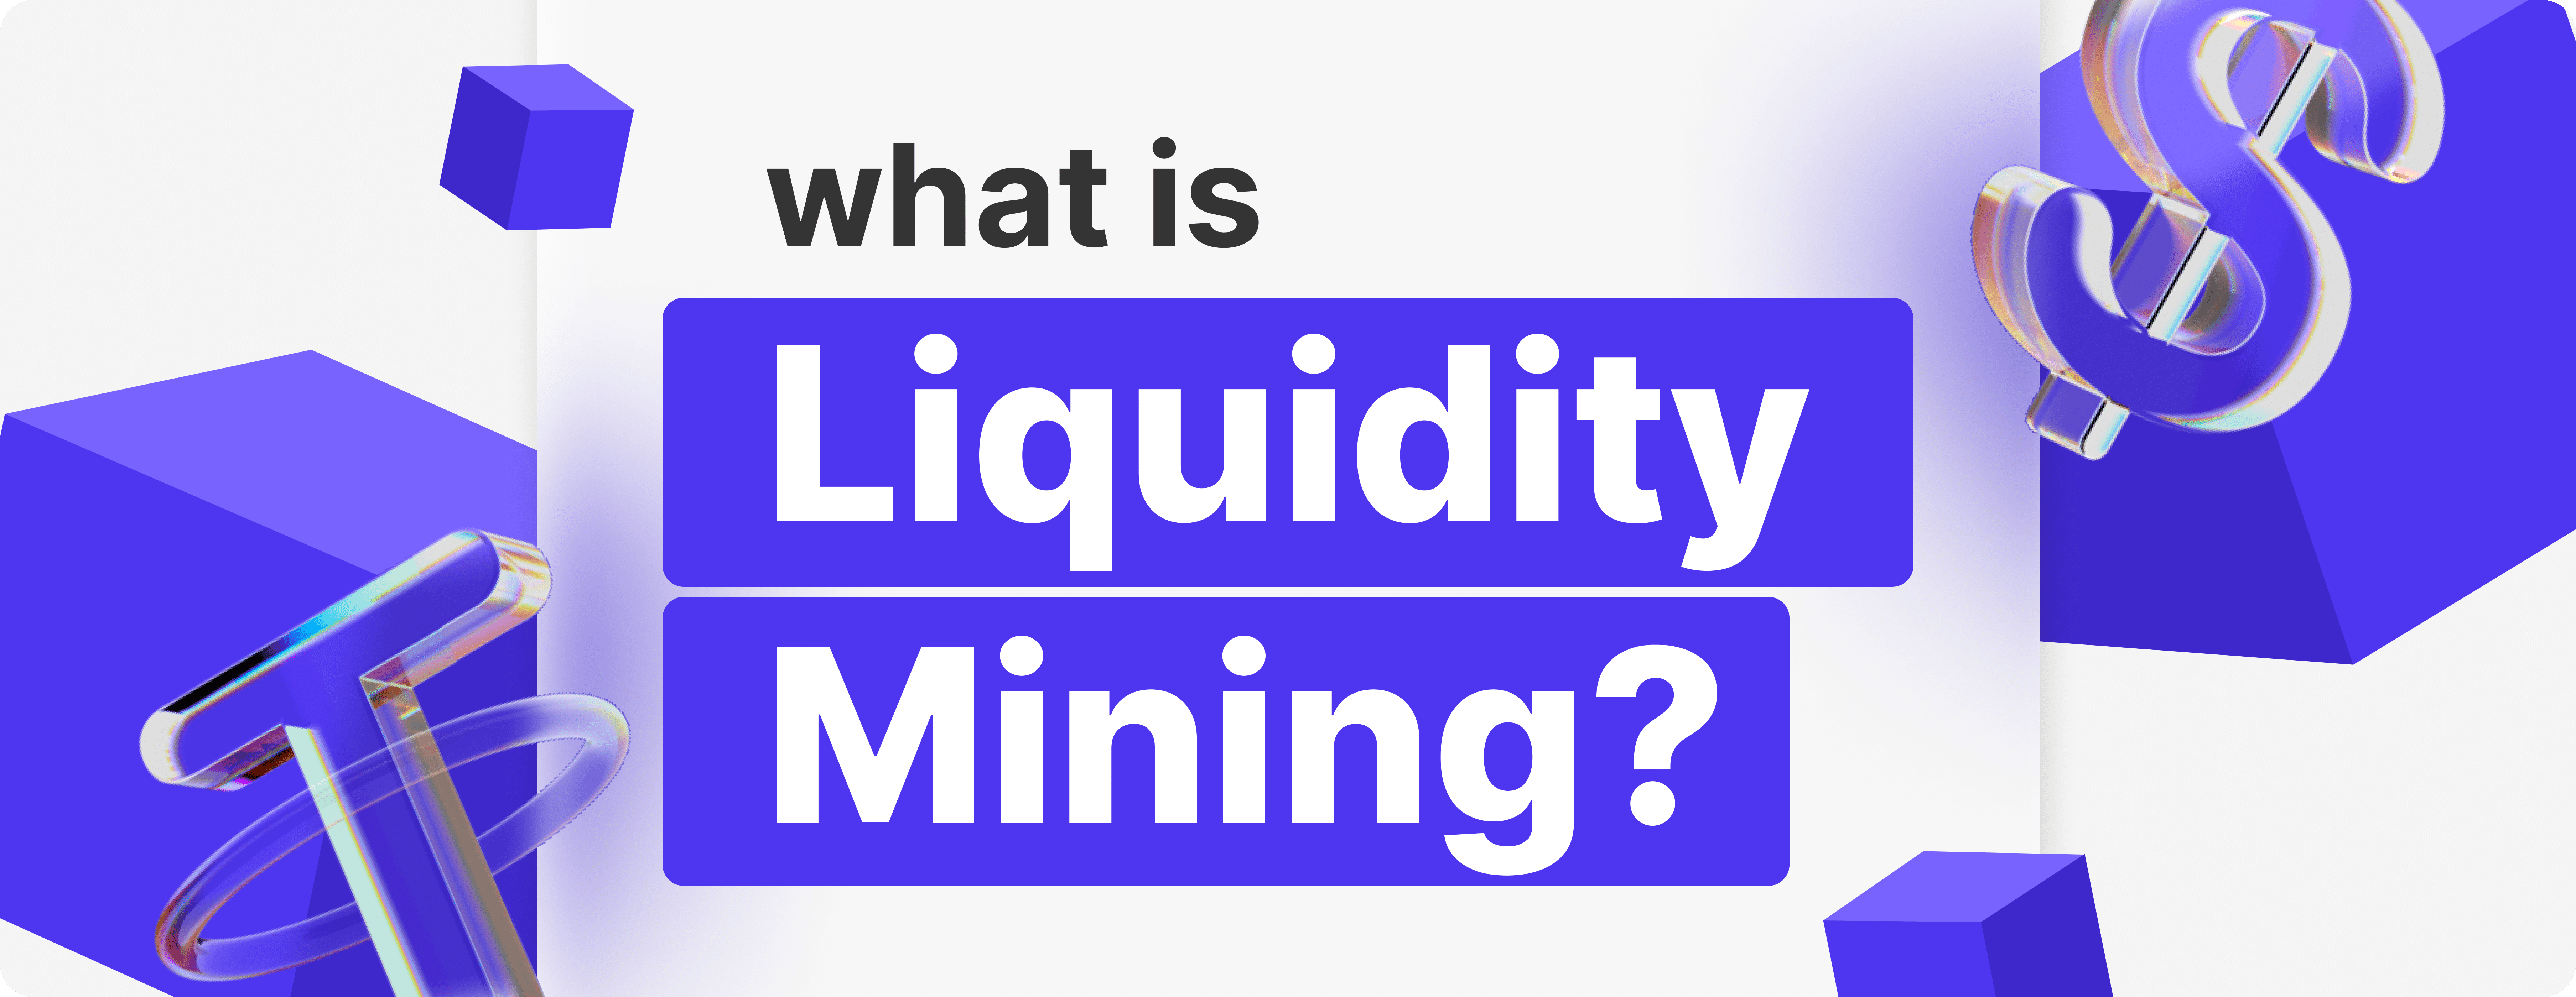 What is Liquidity Mining